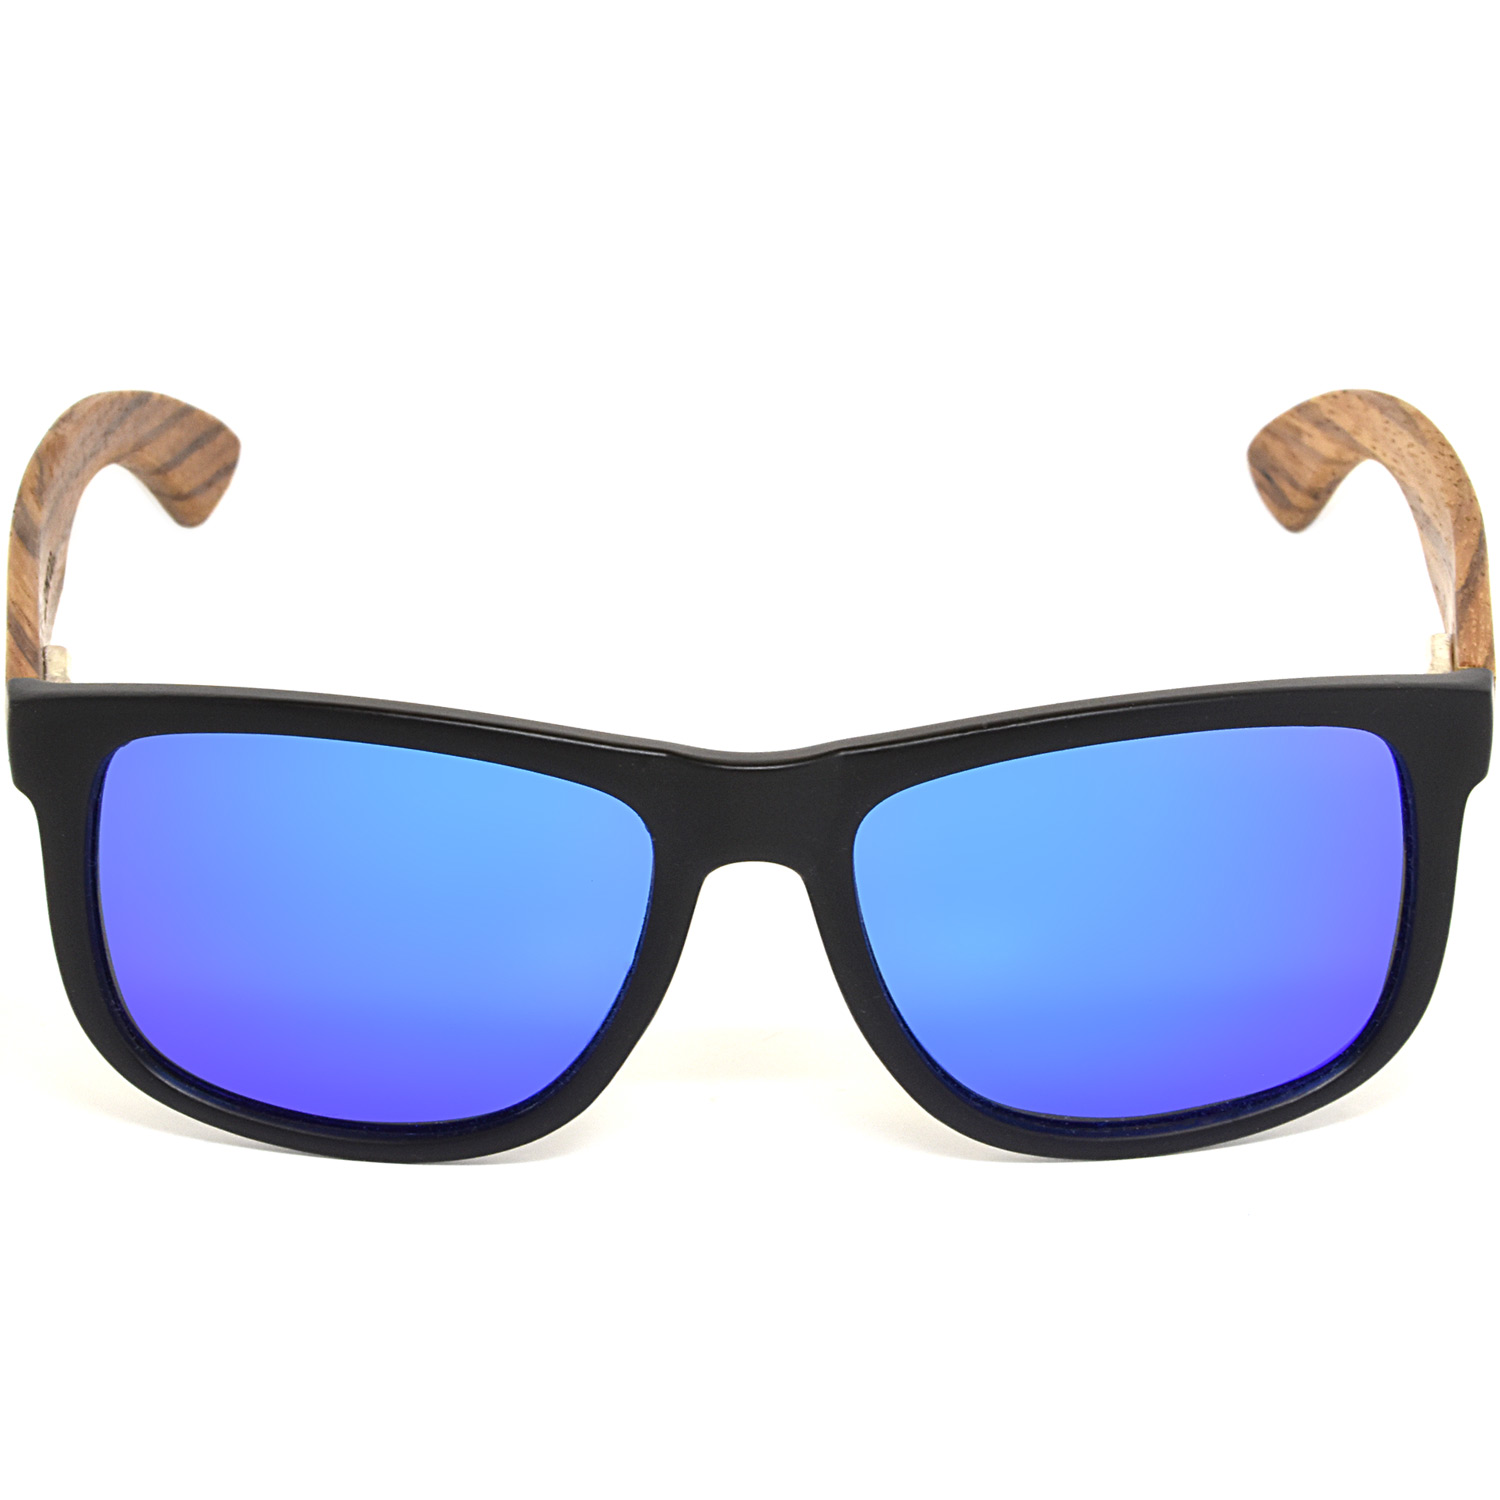 Square zebra wood sunglasses blue mirrored polarized lenses acetate front